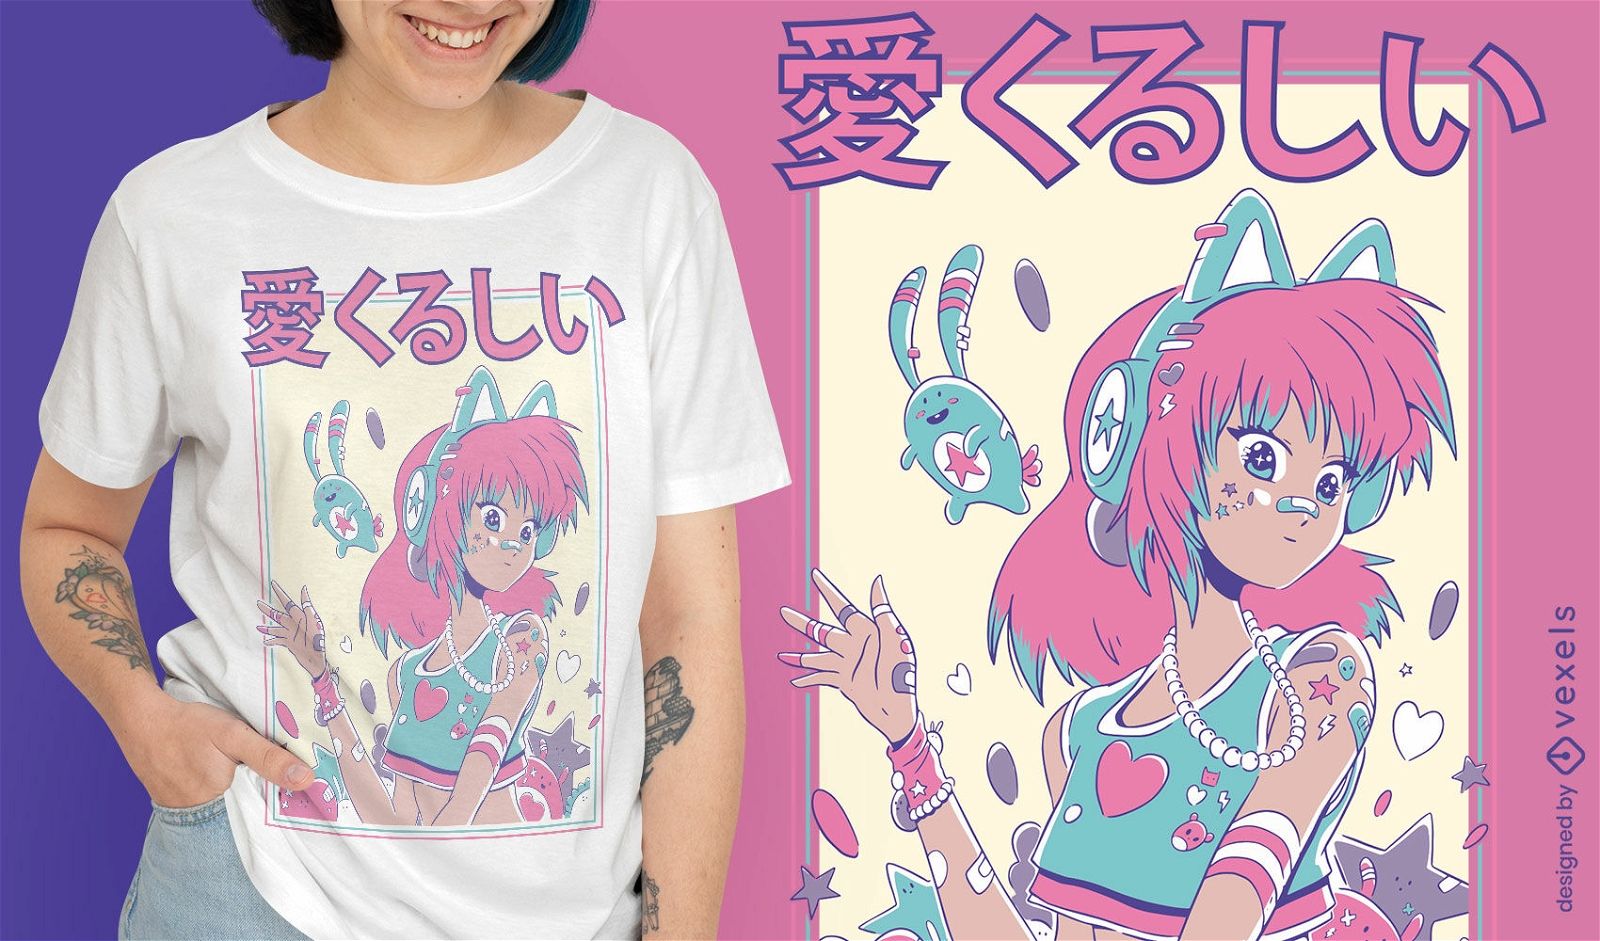 Cute anime girl in cat ears t-shirt design